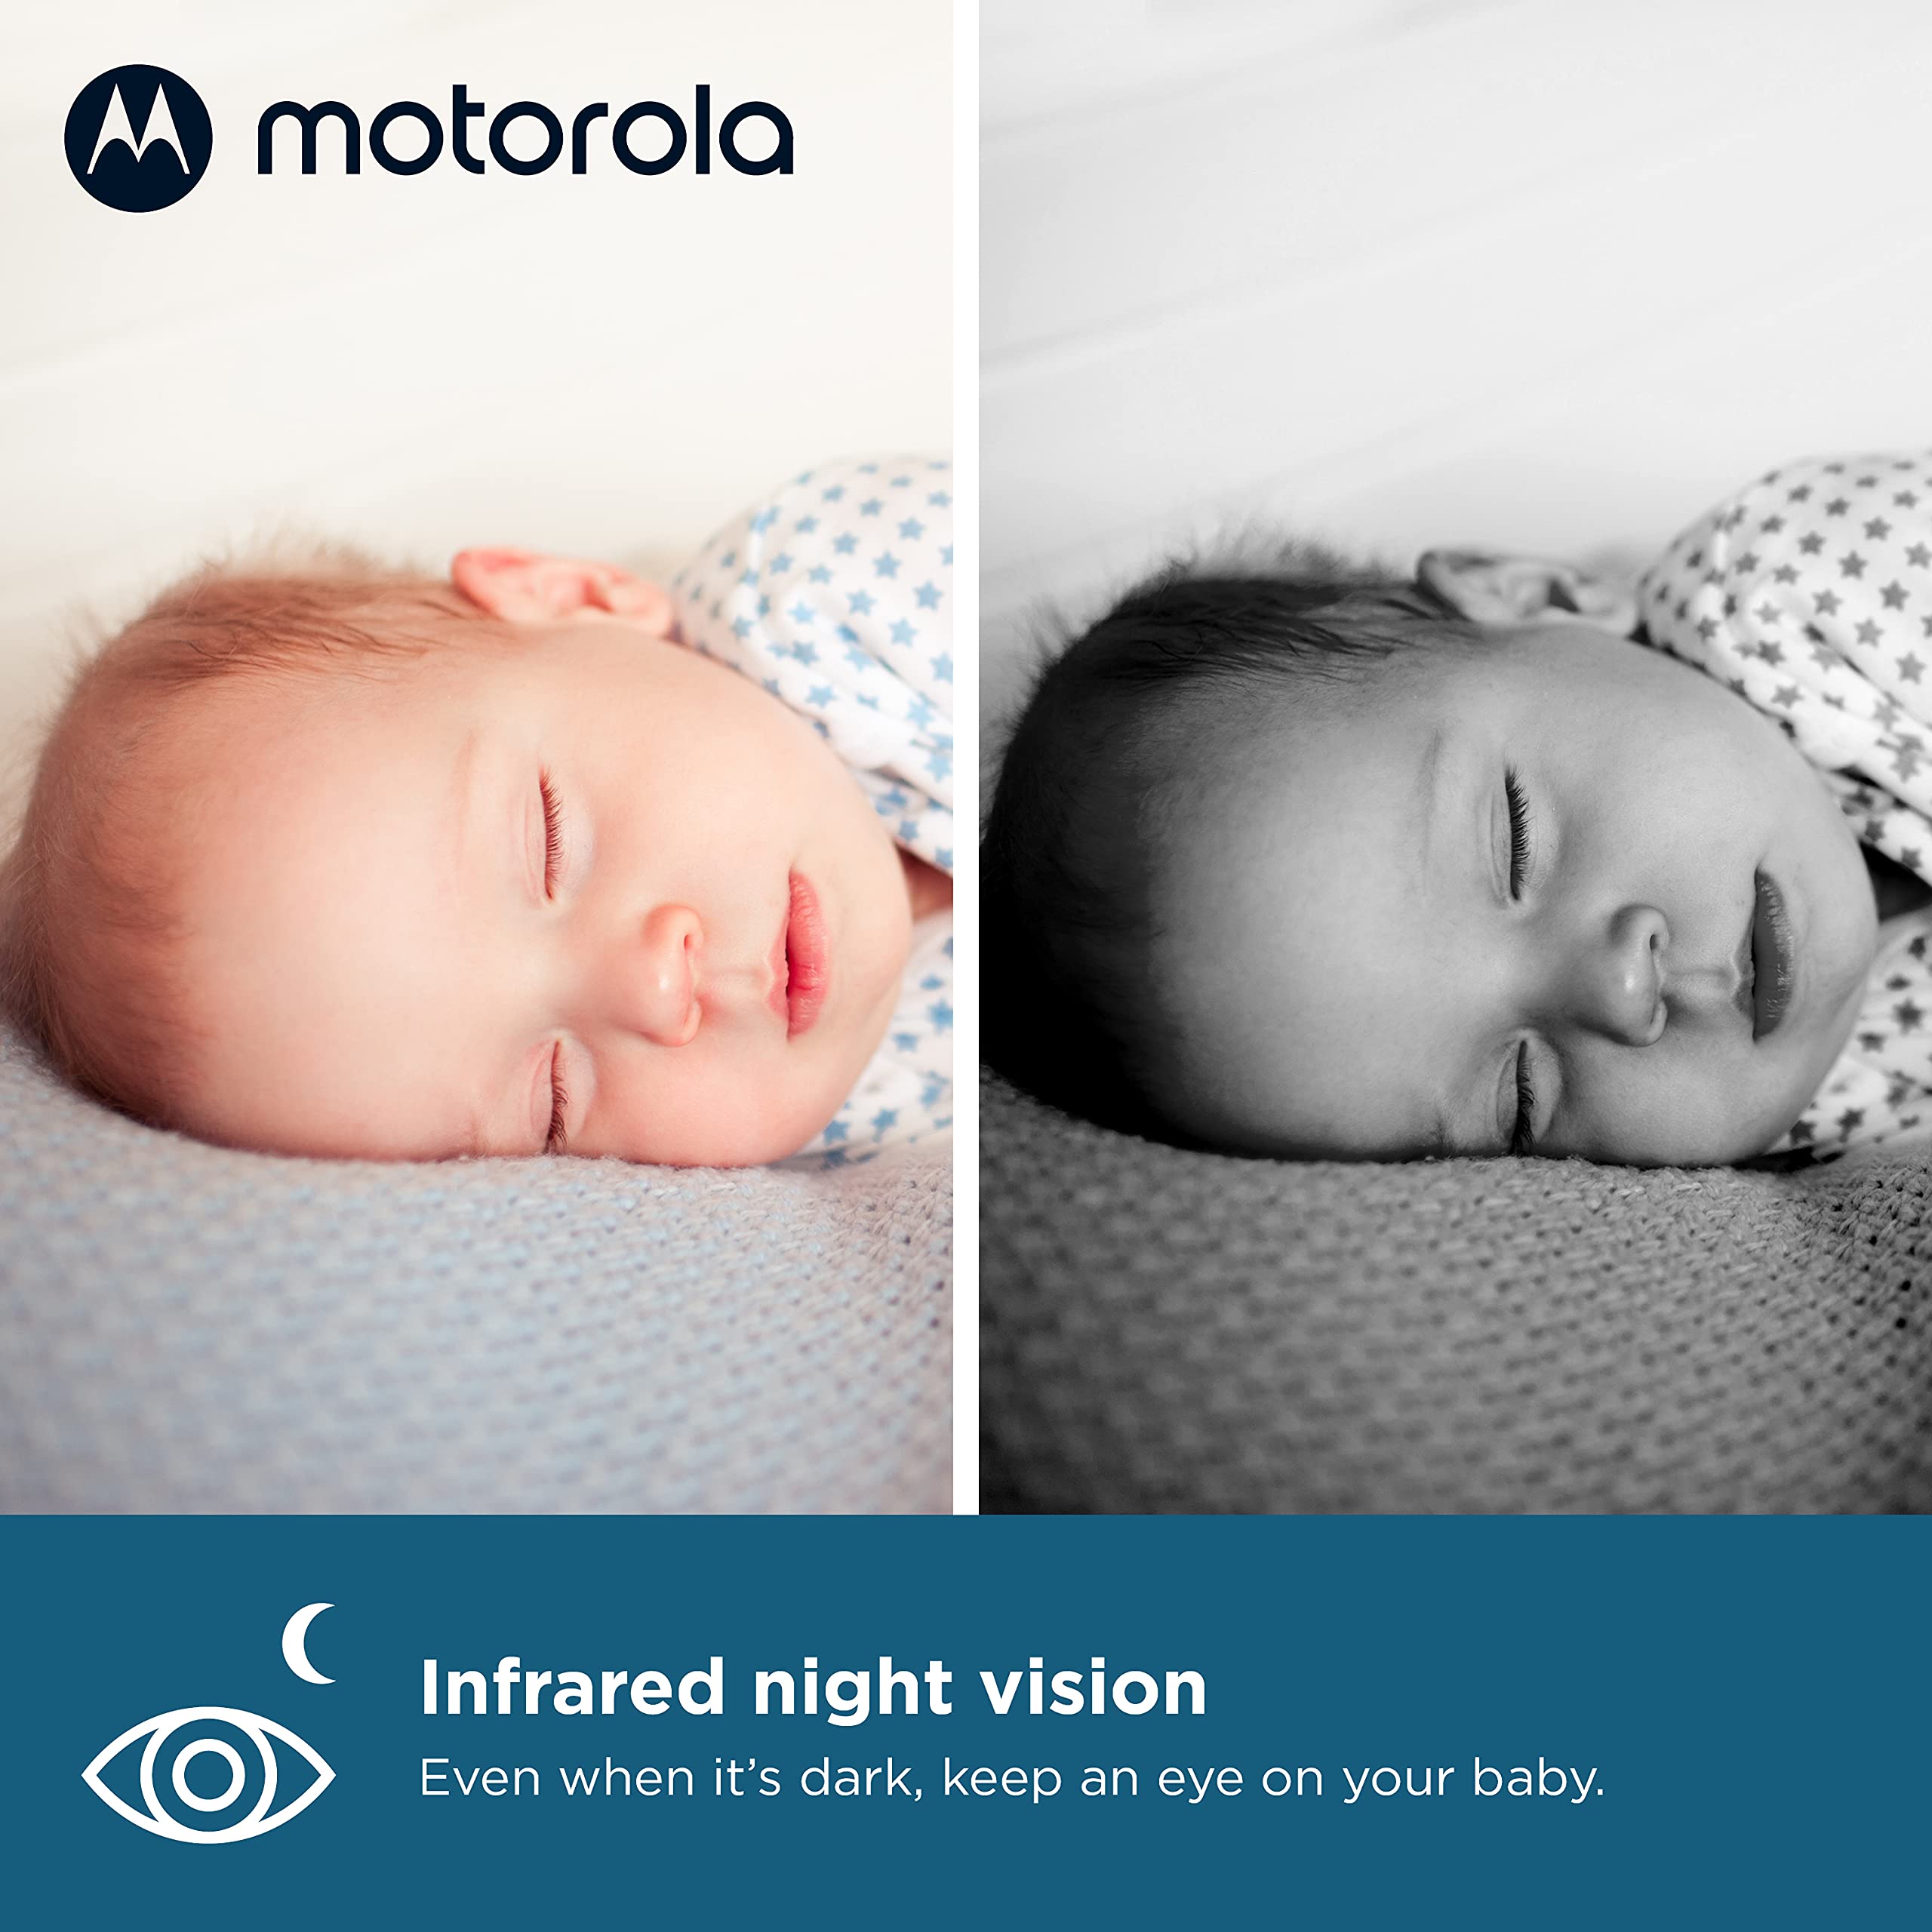 Motorola Baby Monitor-VM50G Video Baby Monitor with 2 Cameras, 1000ft Range 2.4 GHz Wireless 5